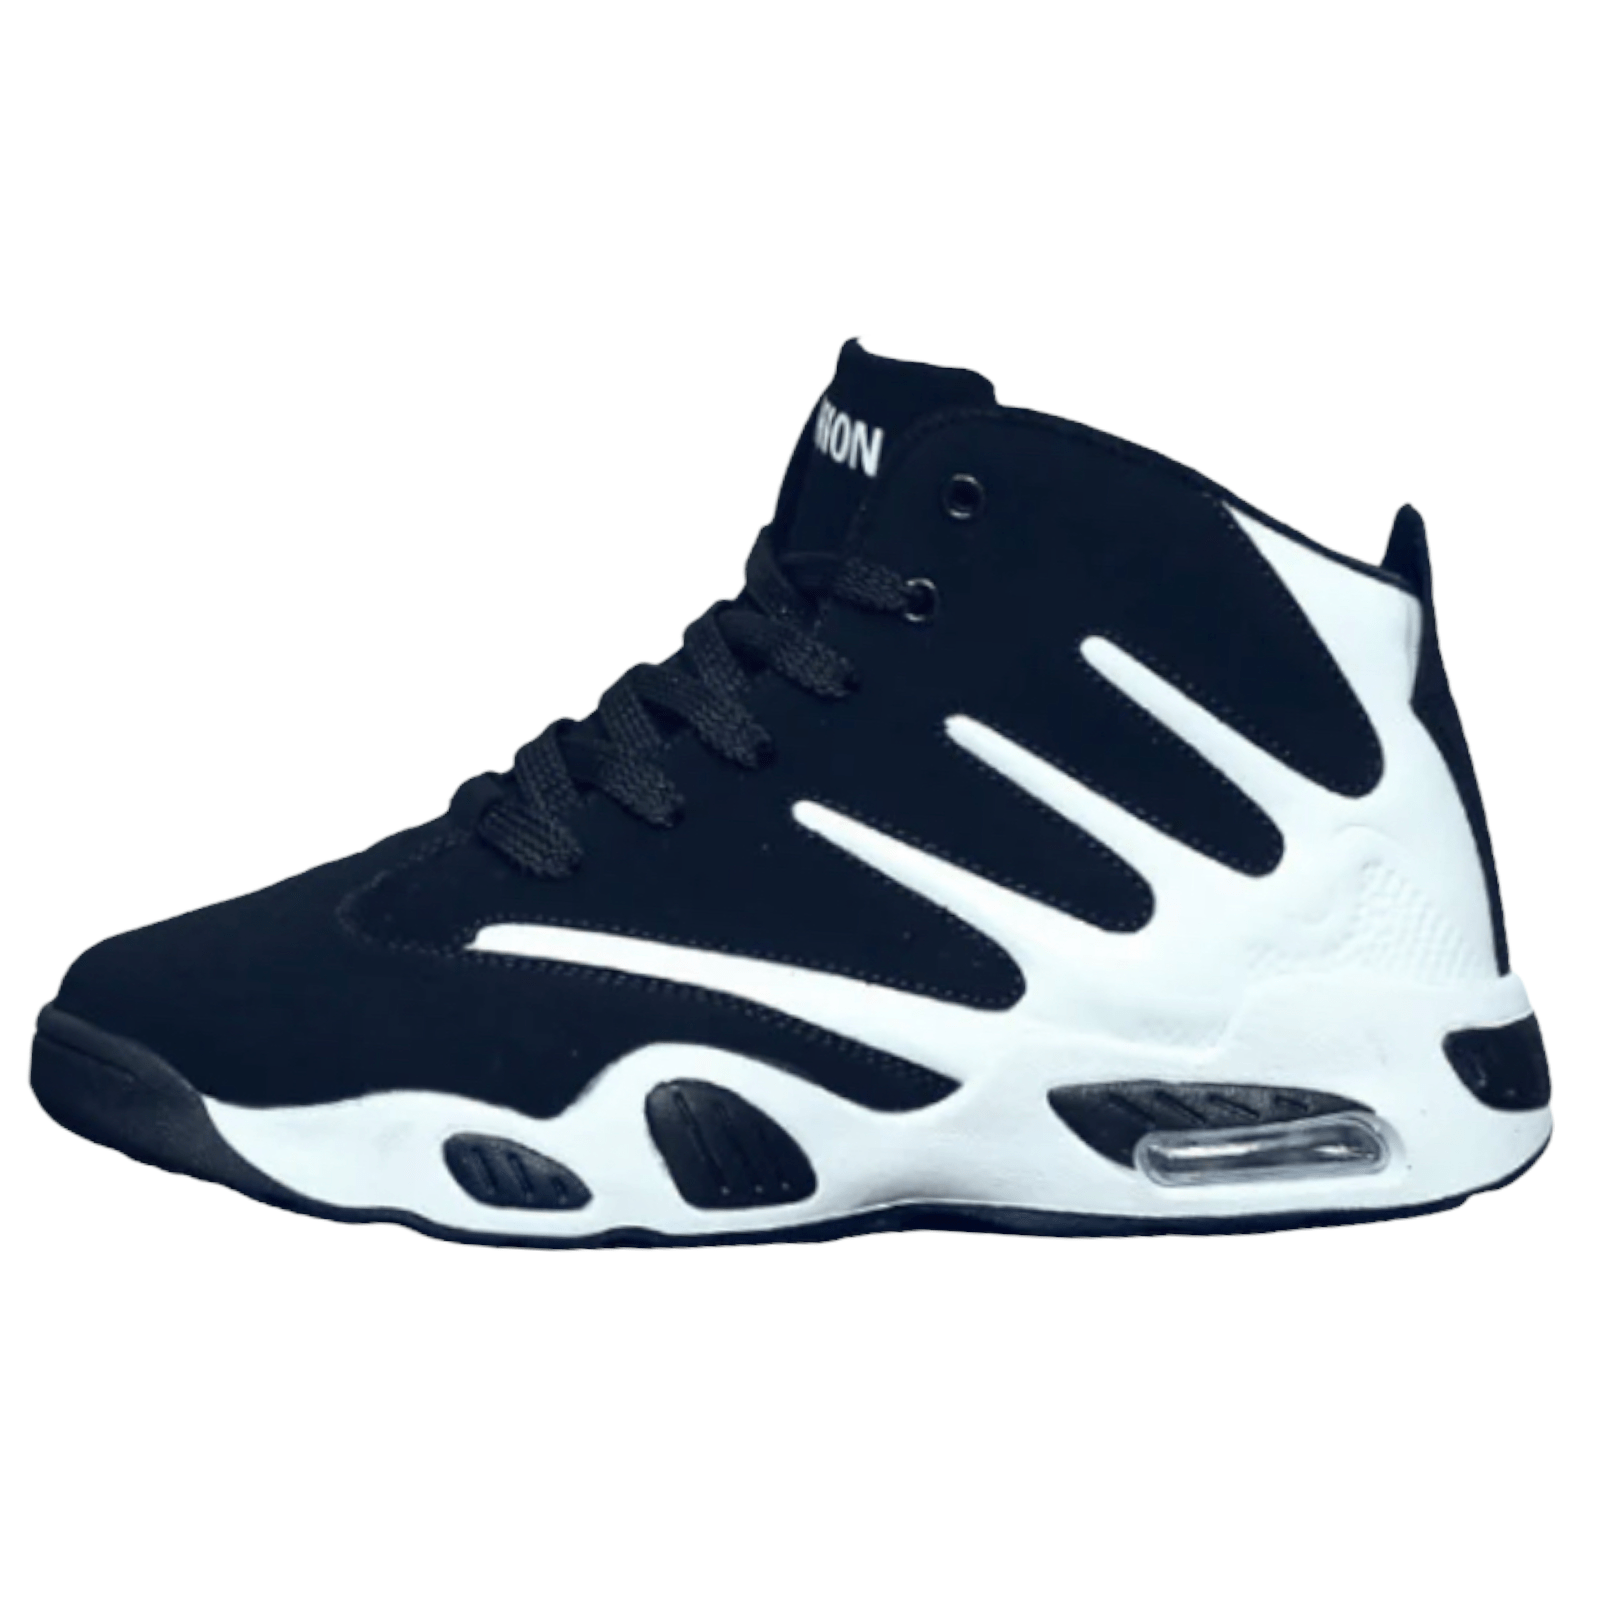 black white men's sneakers claw flashlander left side basketball sneakers